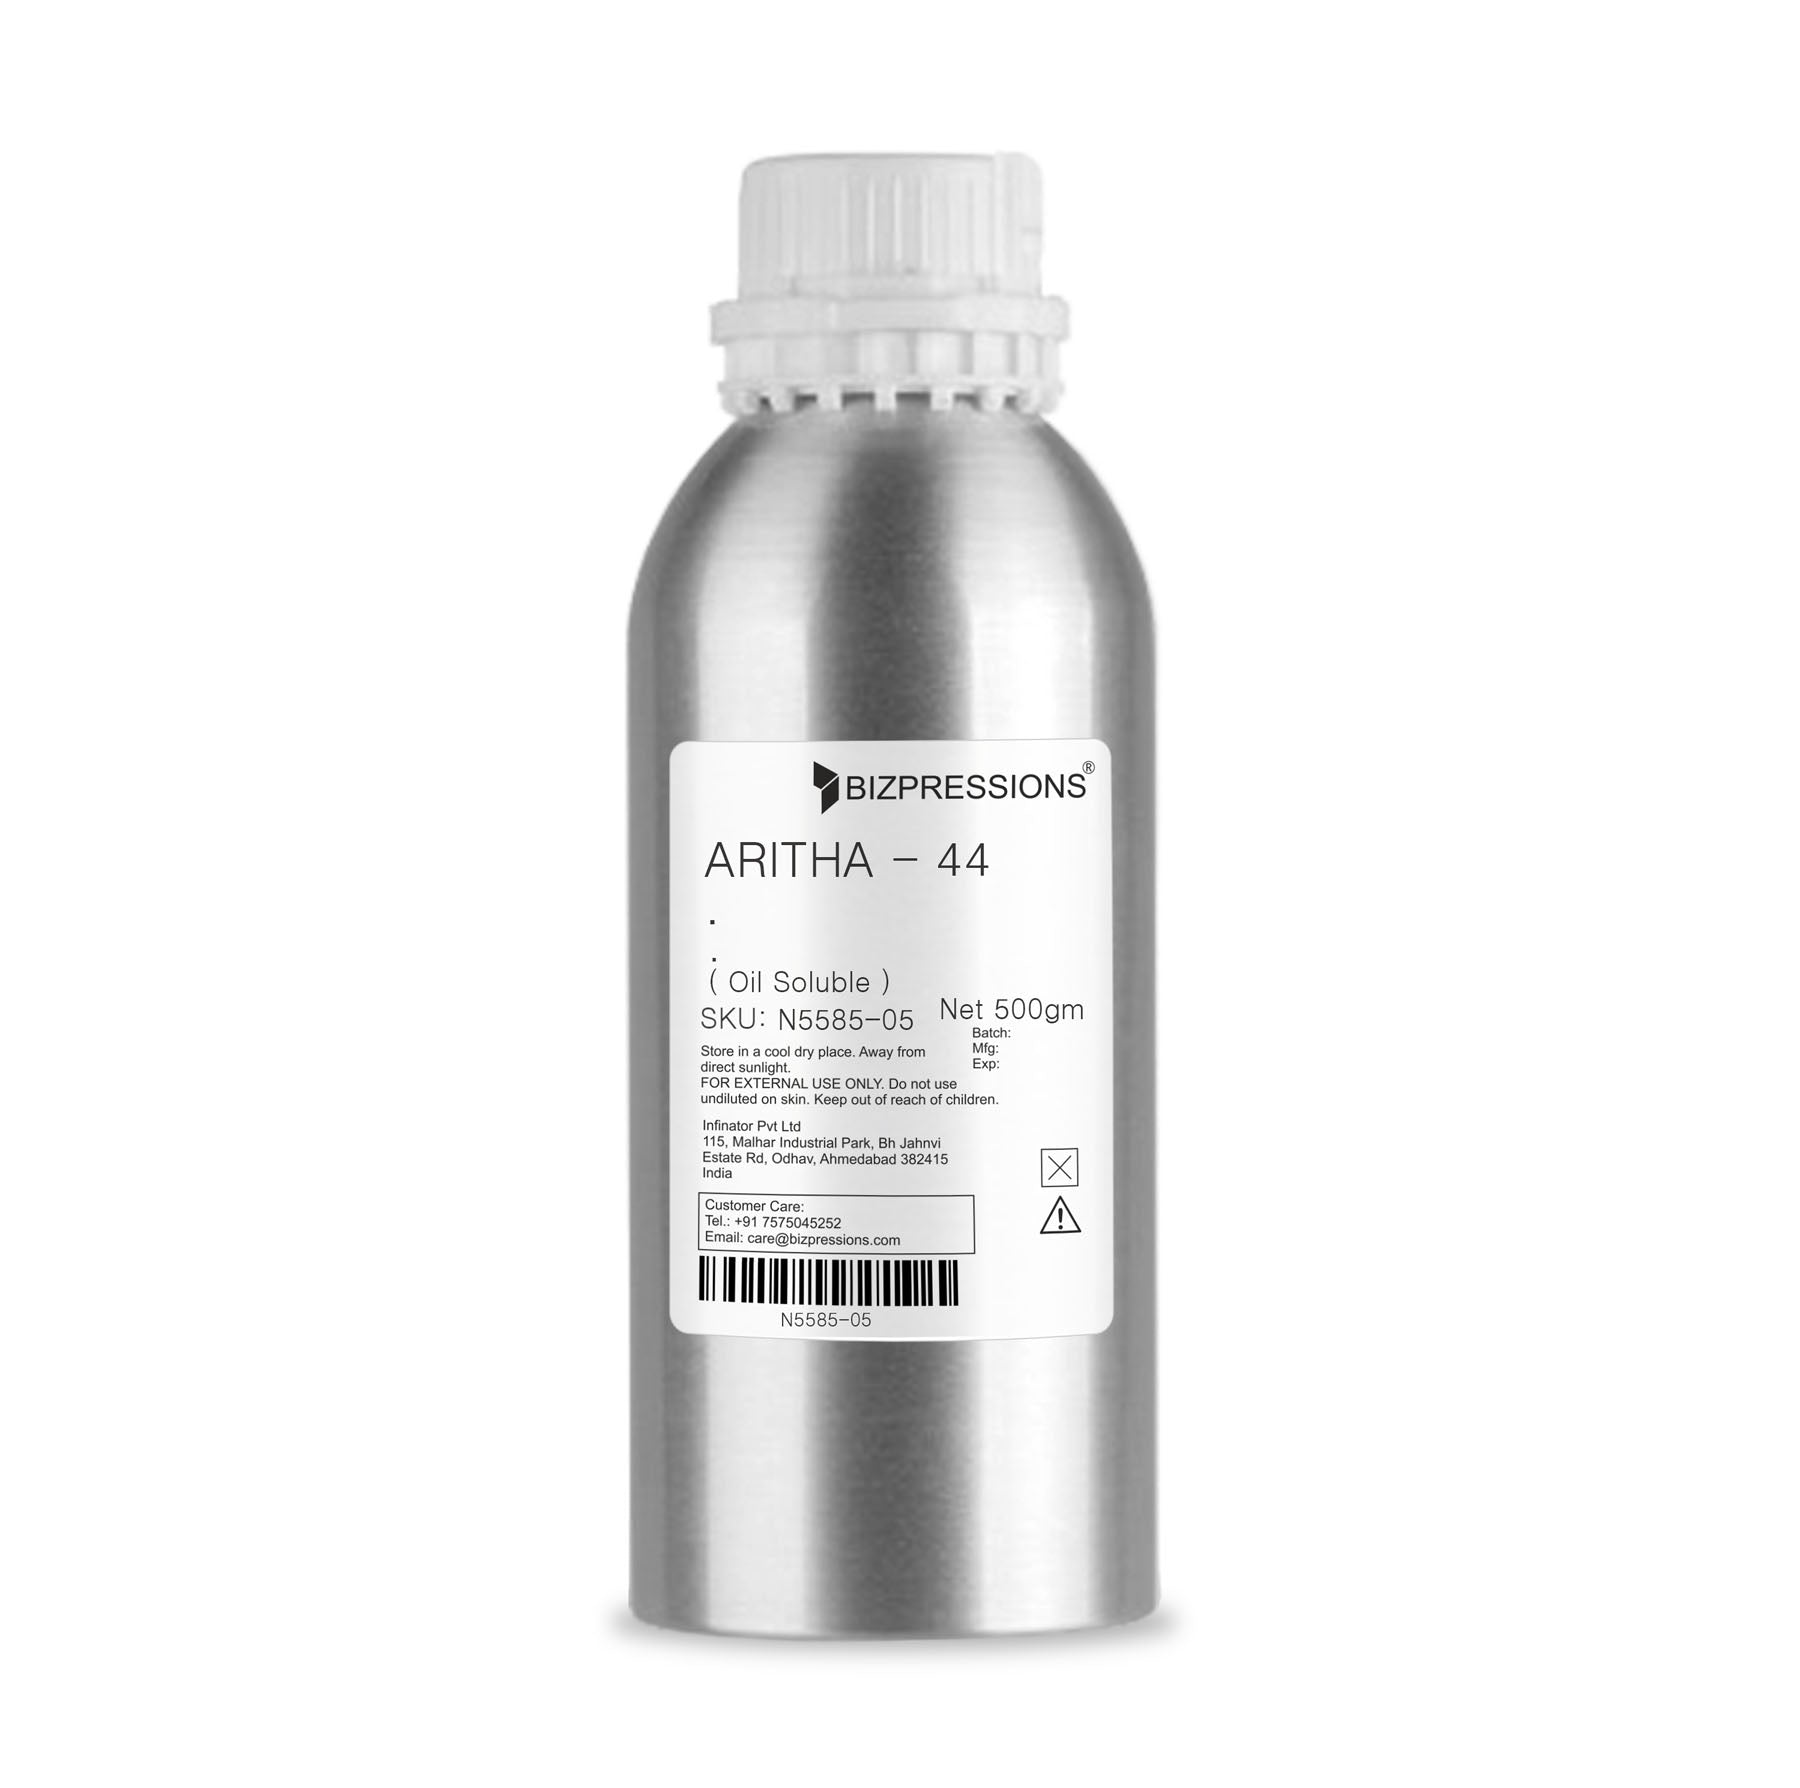 ARITHA - 44 - Fragrance ( Oil Soluble ) - 500 gm